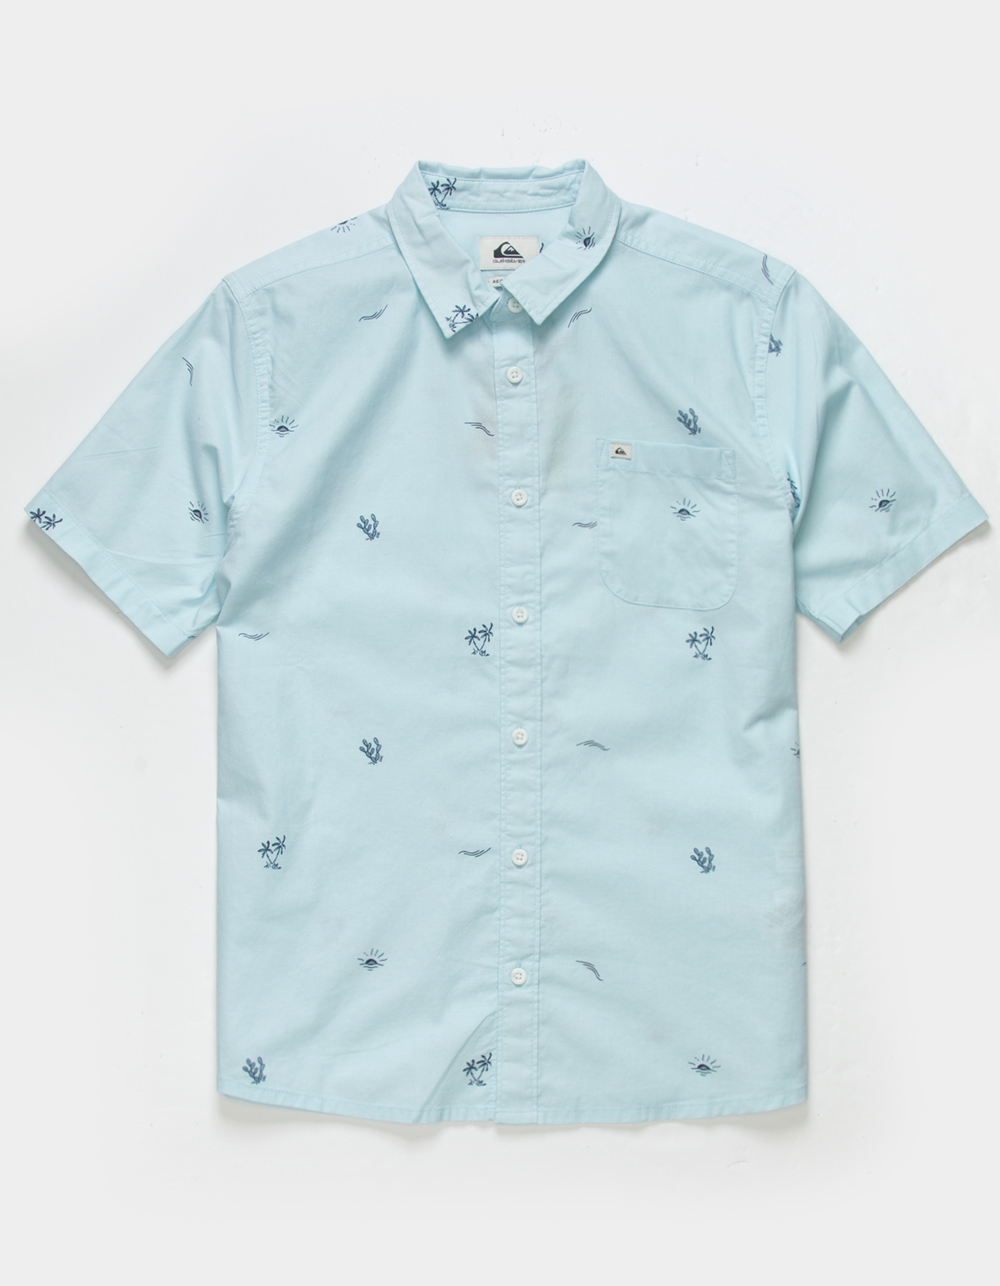 QUIKSILVER Spaced Out Boys Button Up Shirt - LIGHT BLUE | Tillys